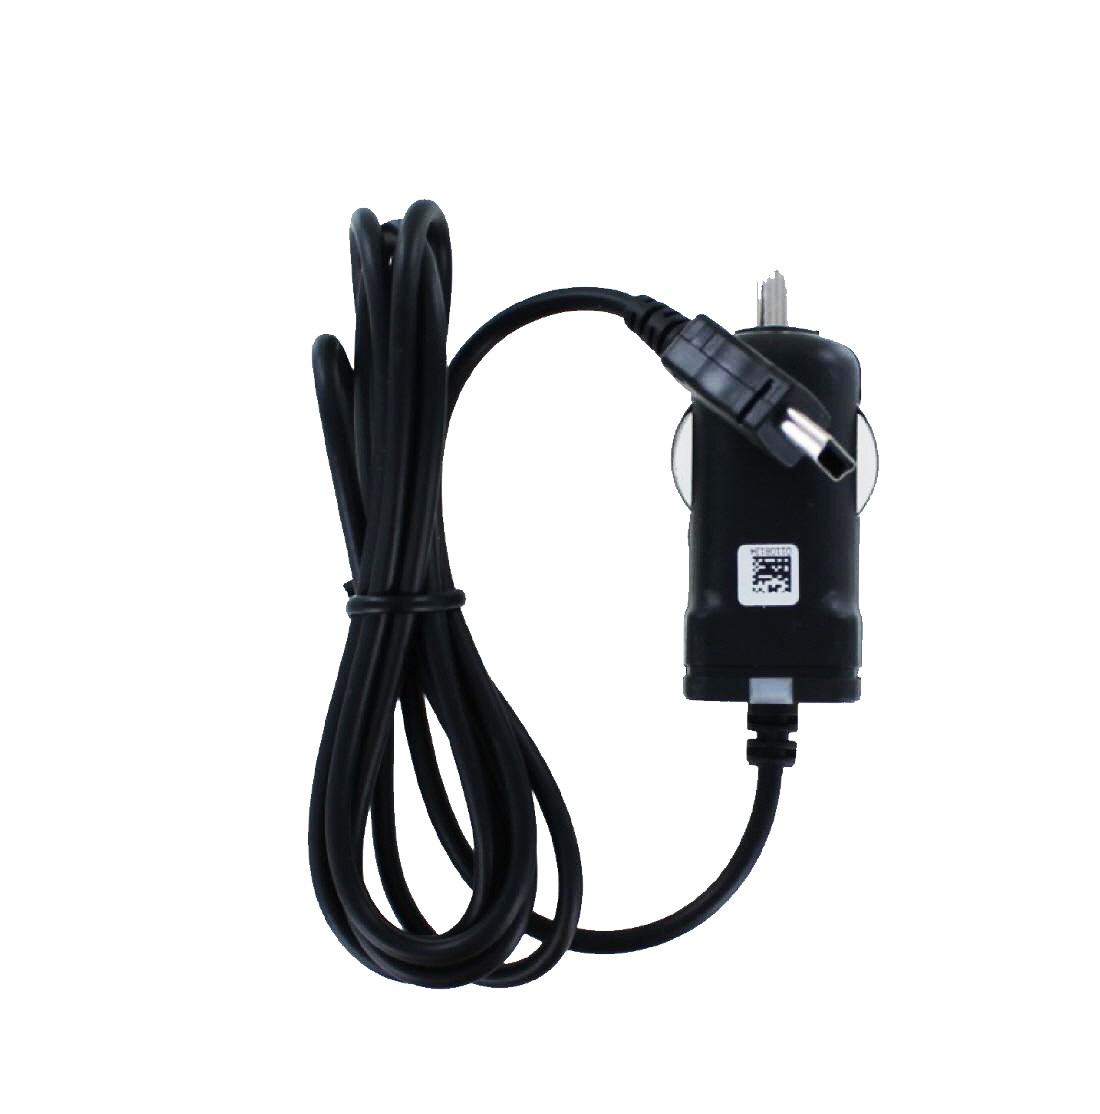 StreetPilot kompatibel Garmin, Netzteil/Ladegerät mit 5 Garmin Volt, Ladekabel schwarz MOBILOTEC C330